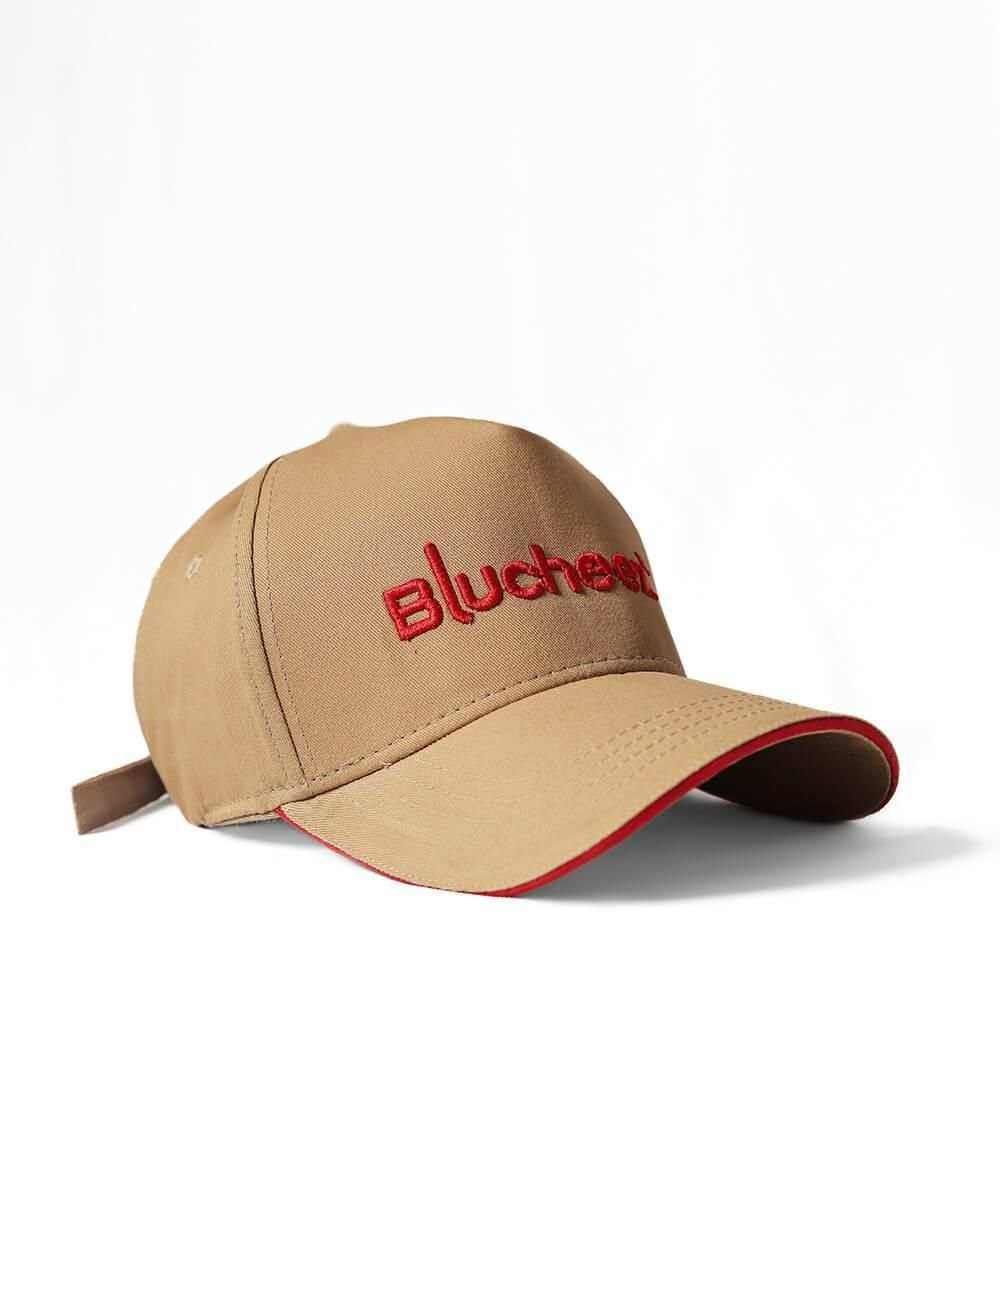 Blucheez Baseball Cap - Blucheez